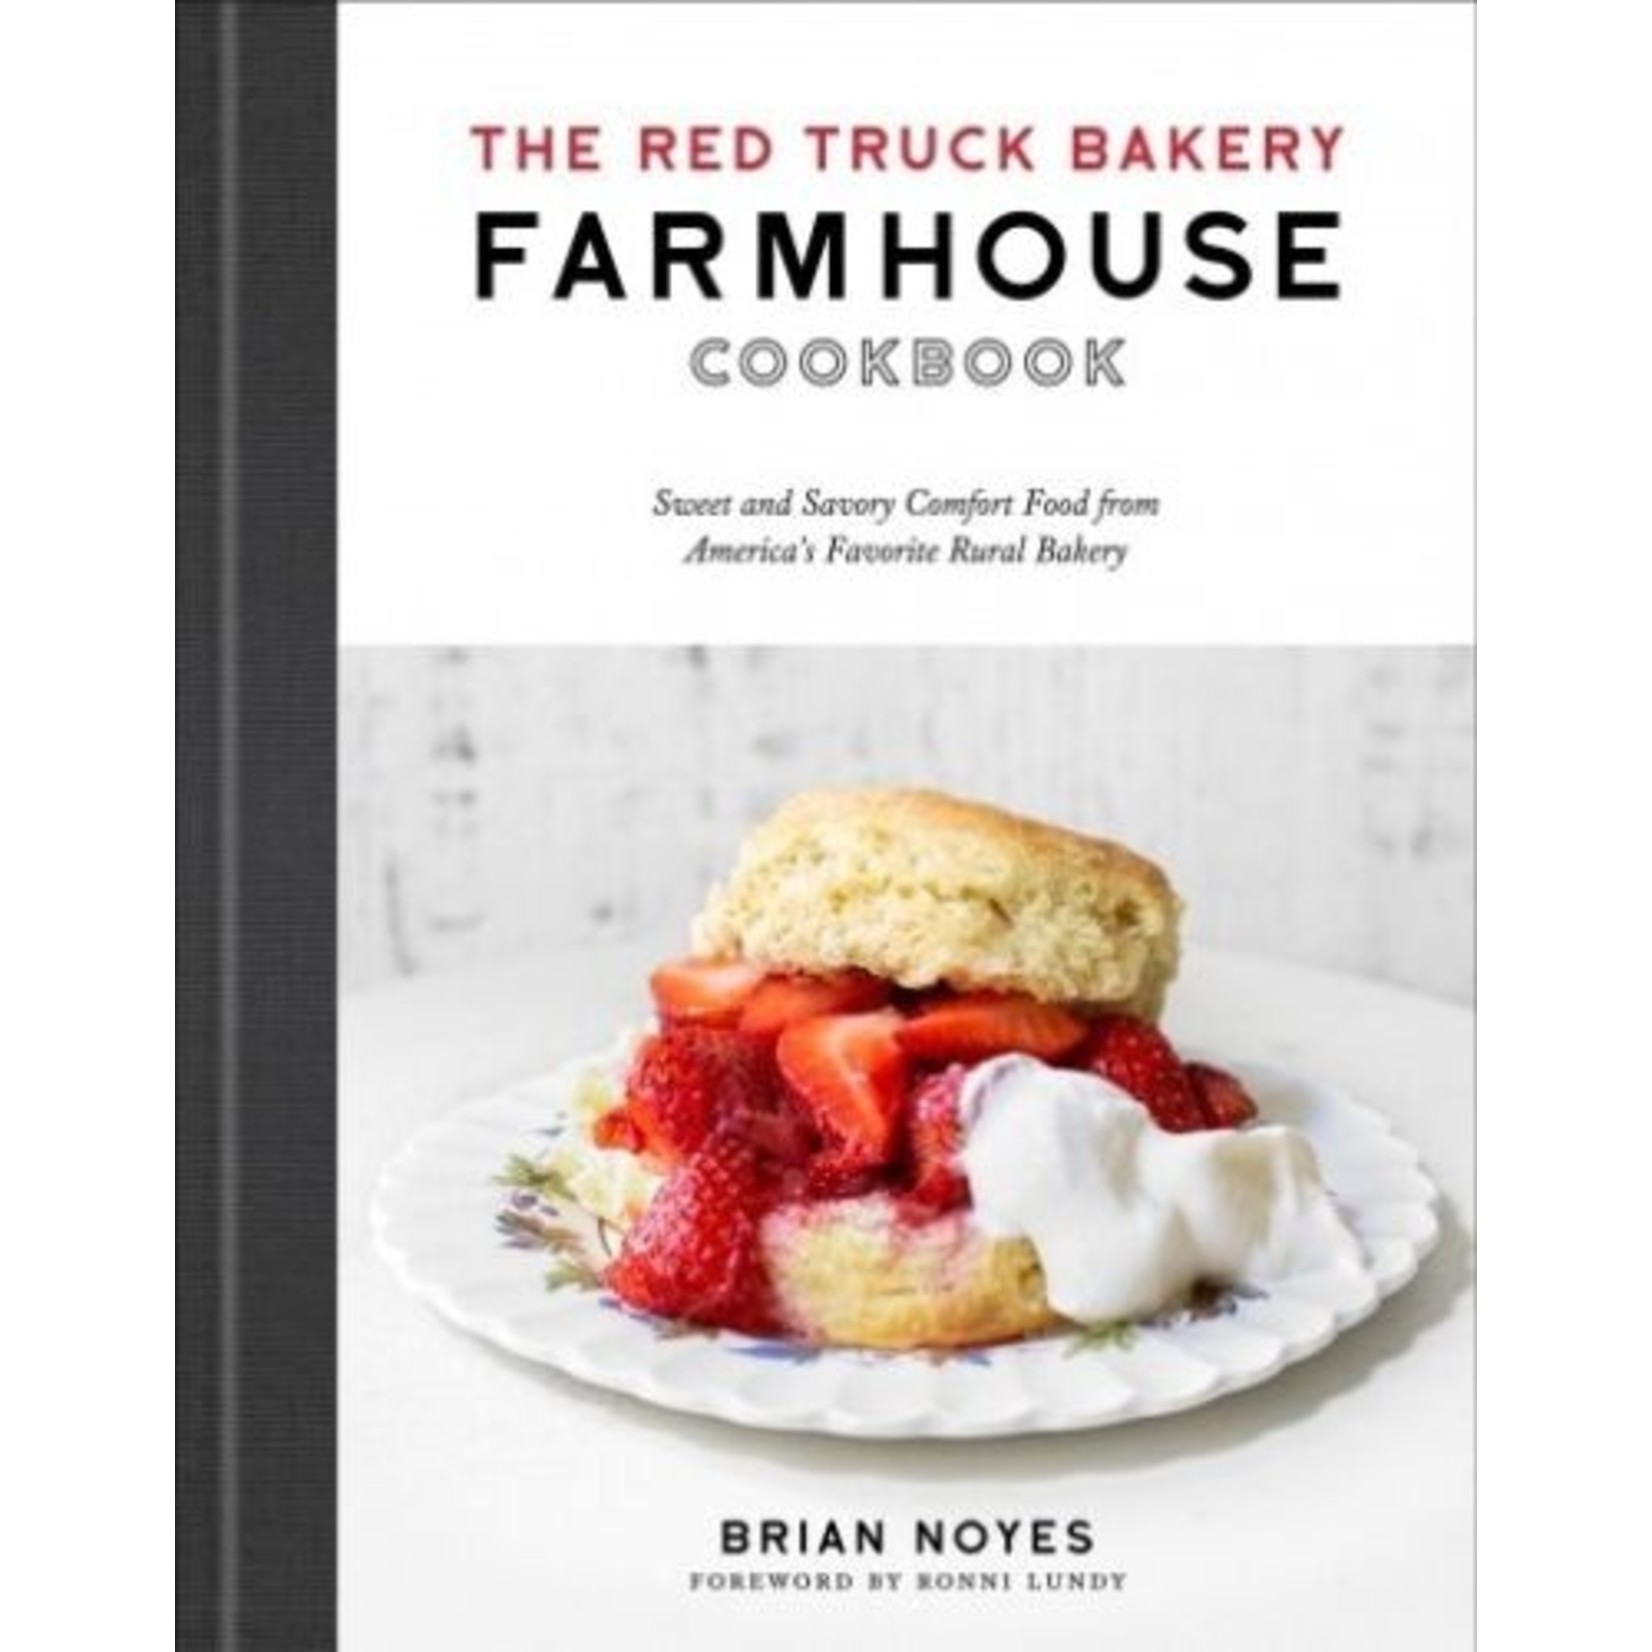 Red Truck Bakery farmhouse Cookbook